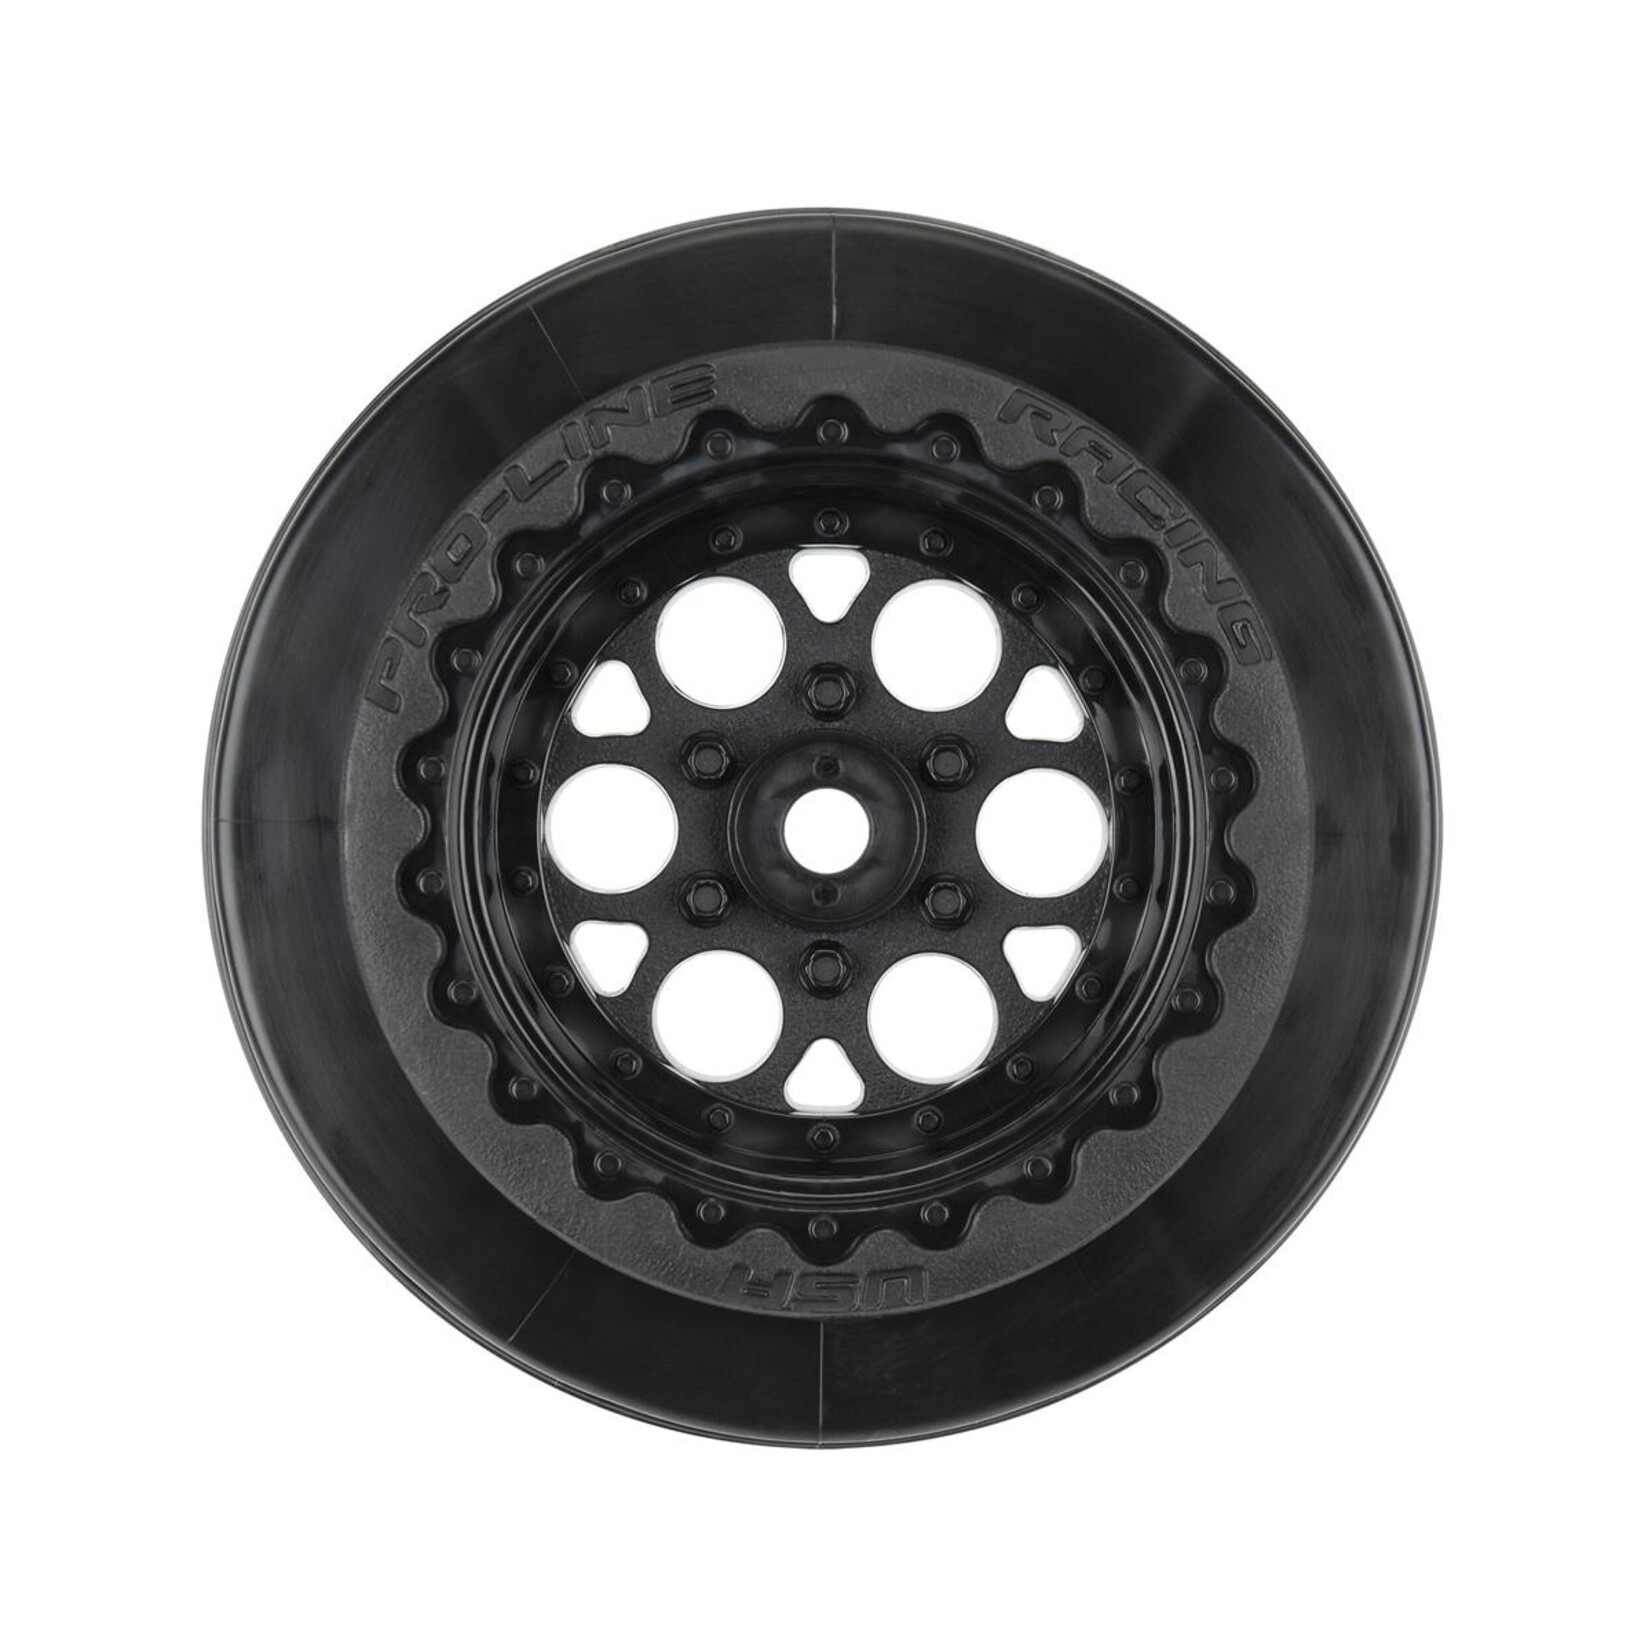 Pro-Line Pro-Line Showtime+ Wide Drag Spec Rear Drag Racing Wheels (2) w/12mm Hex (Black) #2794-03